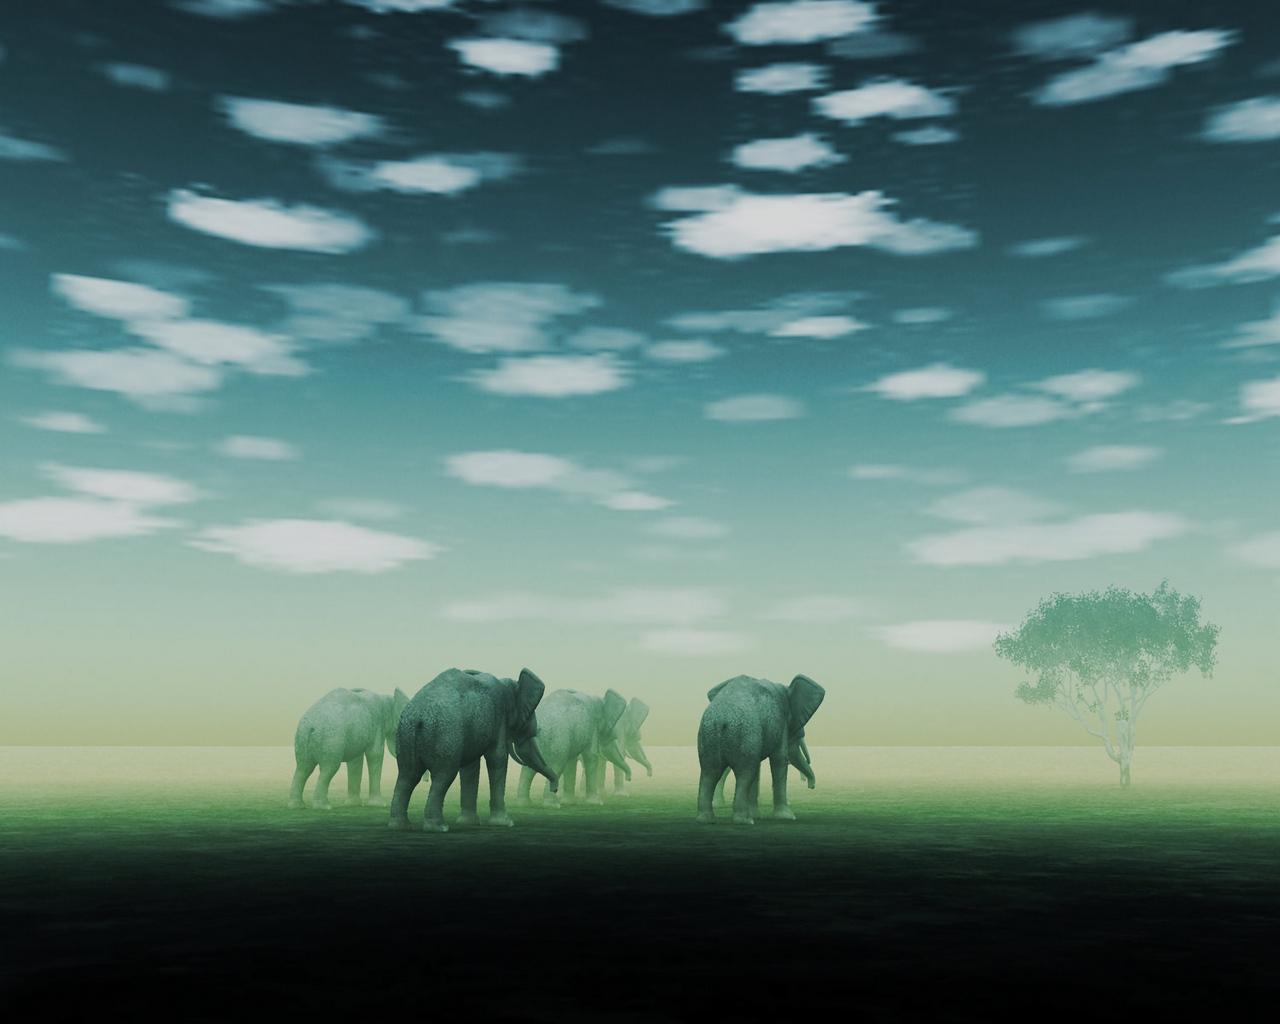 Download wallpaper 1280x1024 elephants, fog, mirage, desert